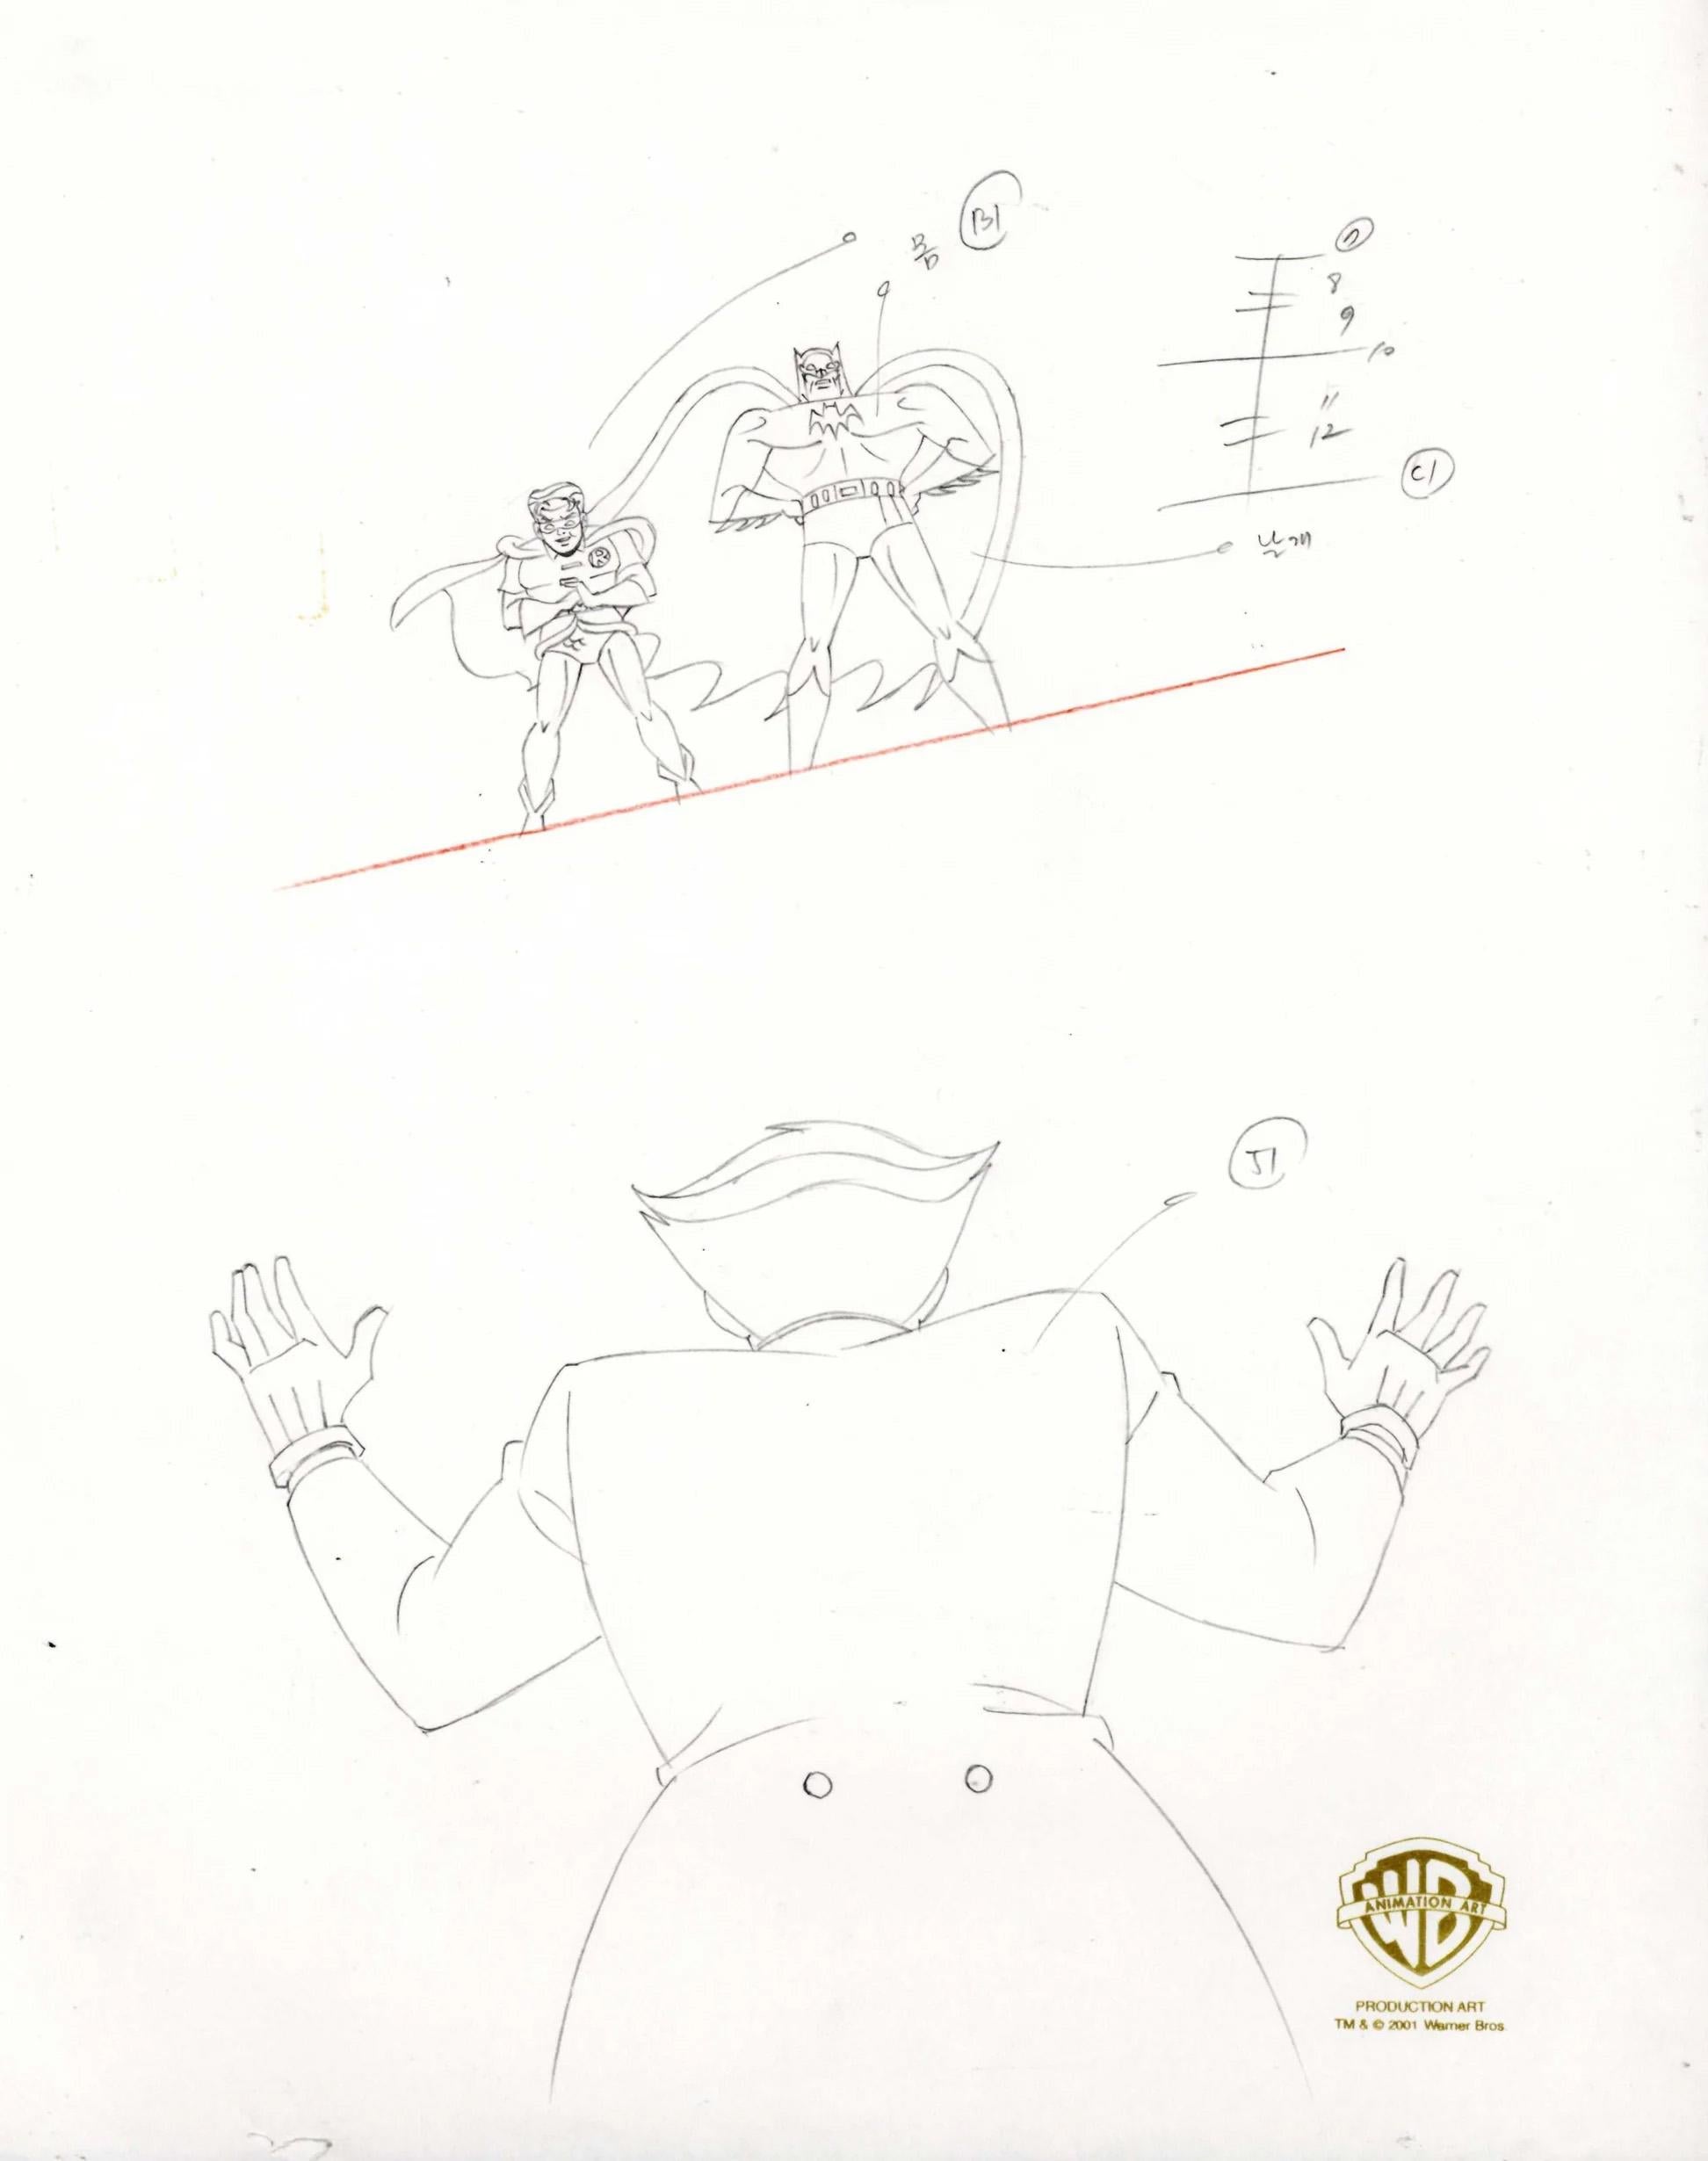 The New Batman Adventures Original Production Drawing: Batman, Robin, and Joker - Art by DC Comics Studio Artists